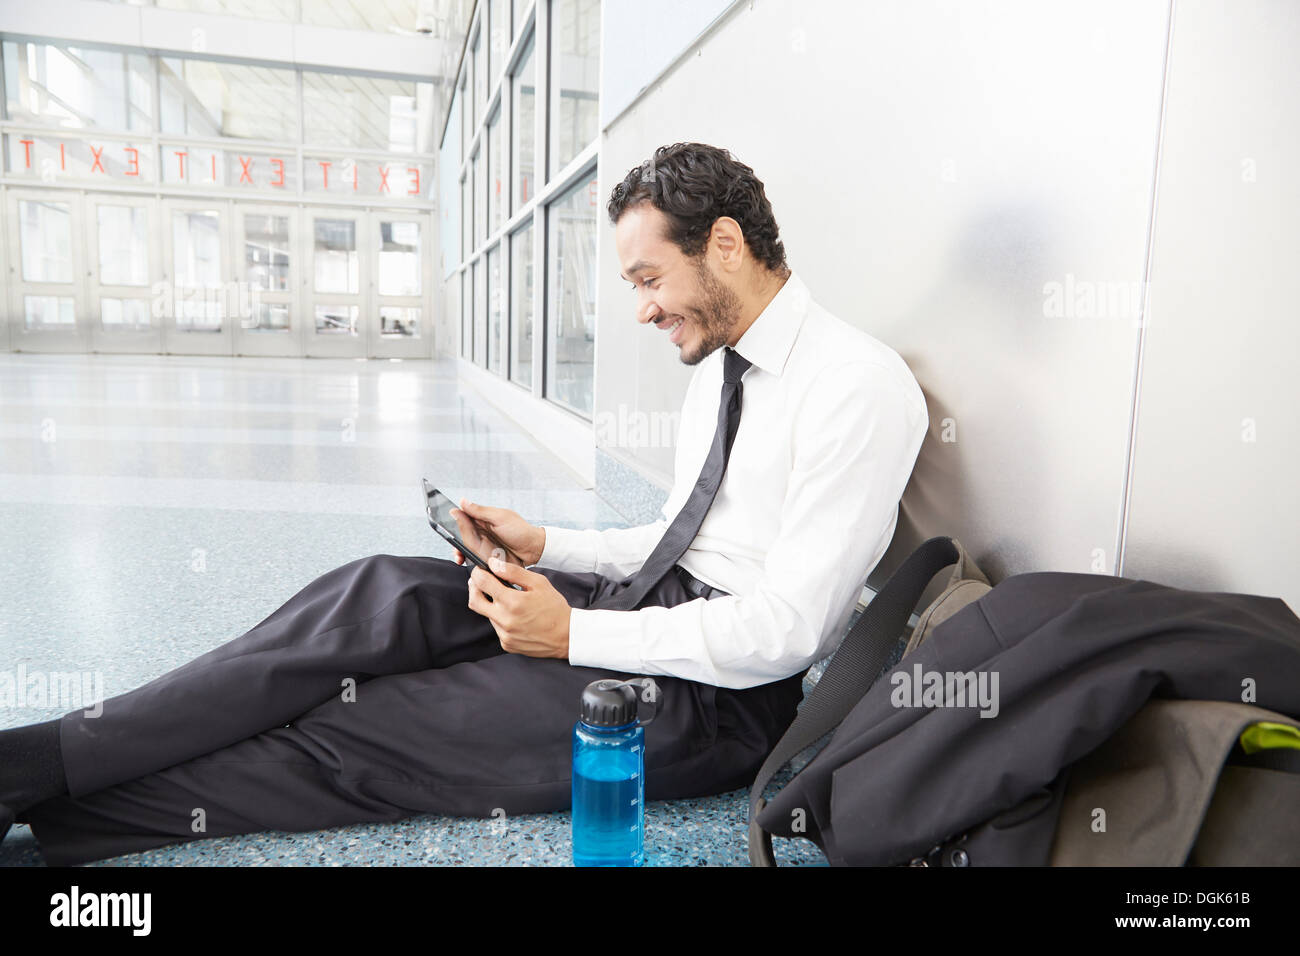 Businessman sitting on floor using digital tablet Stock Photo